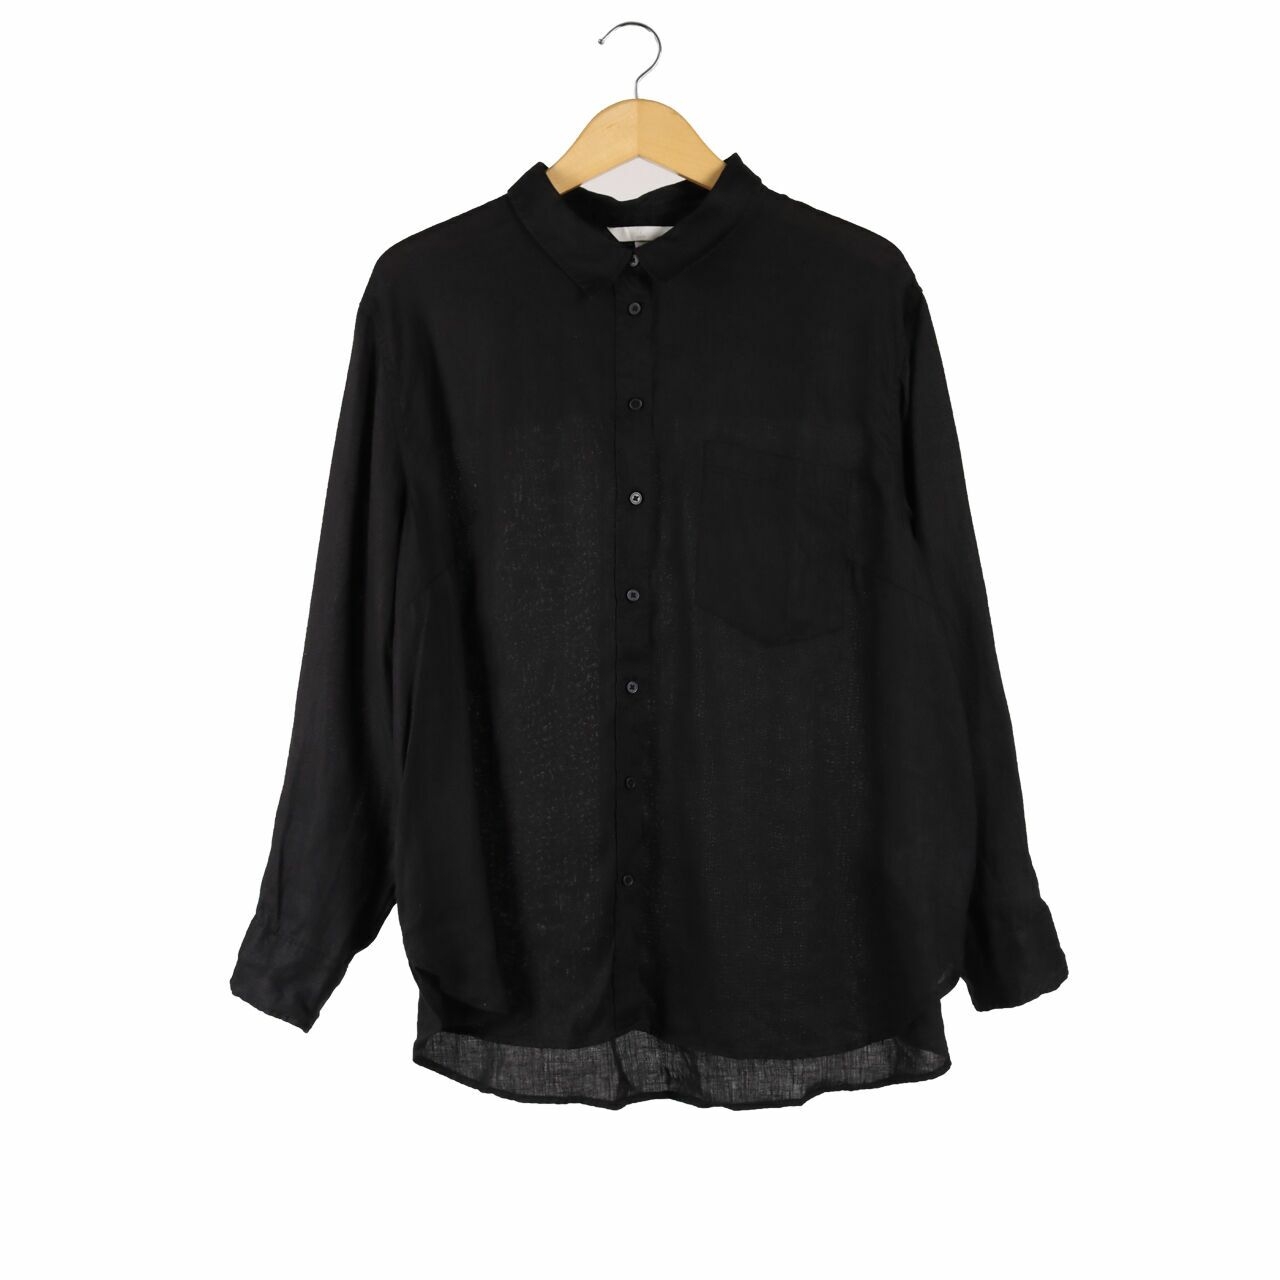 H&M Black Shirt